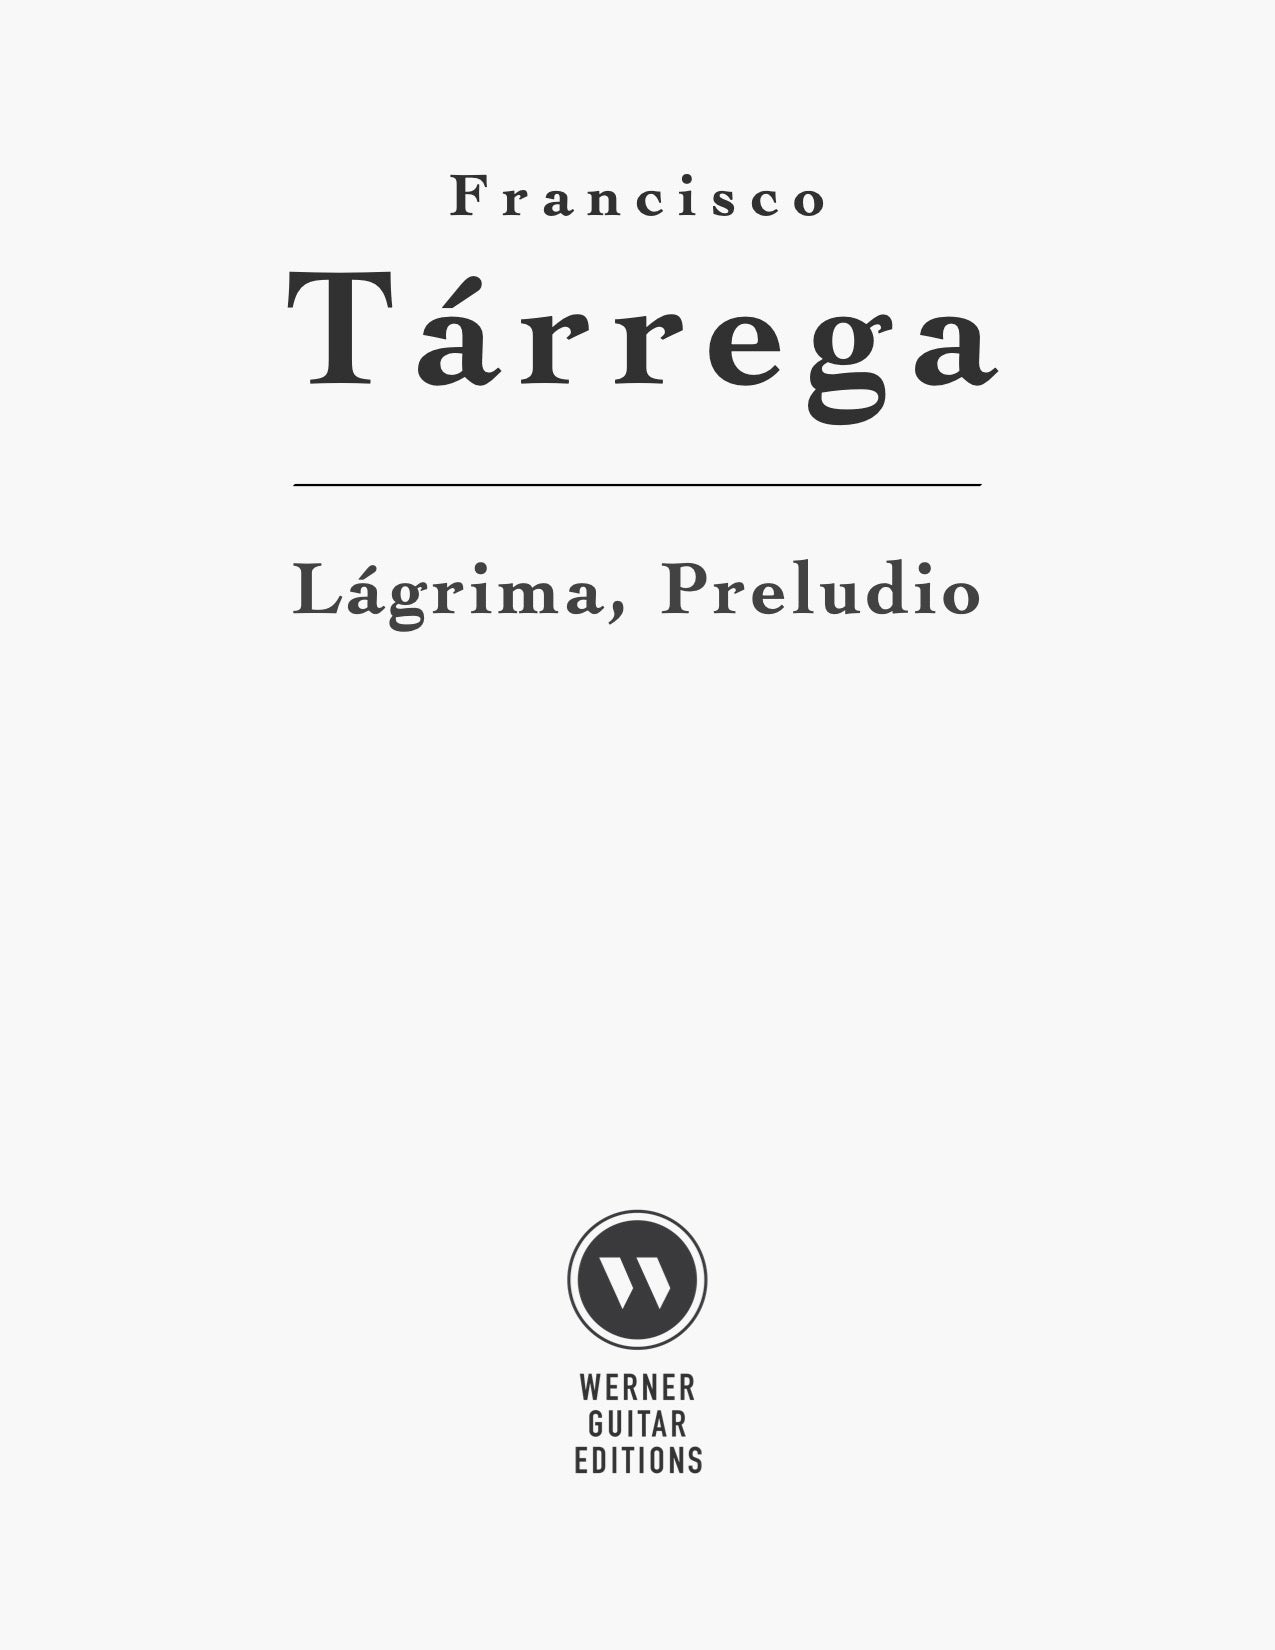 Lágrima, Preludio by Francisco Tárrega - PDF Sheet Music